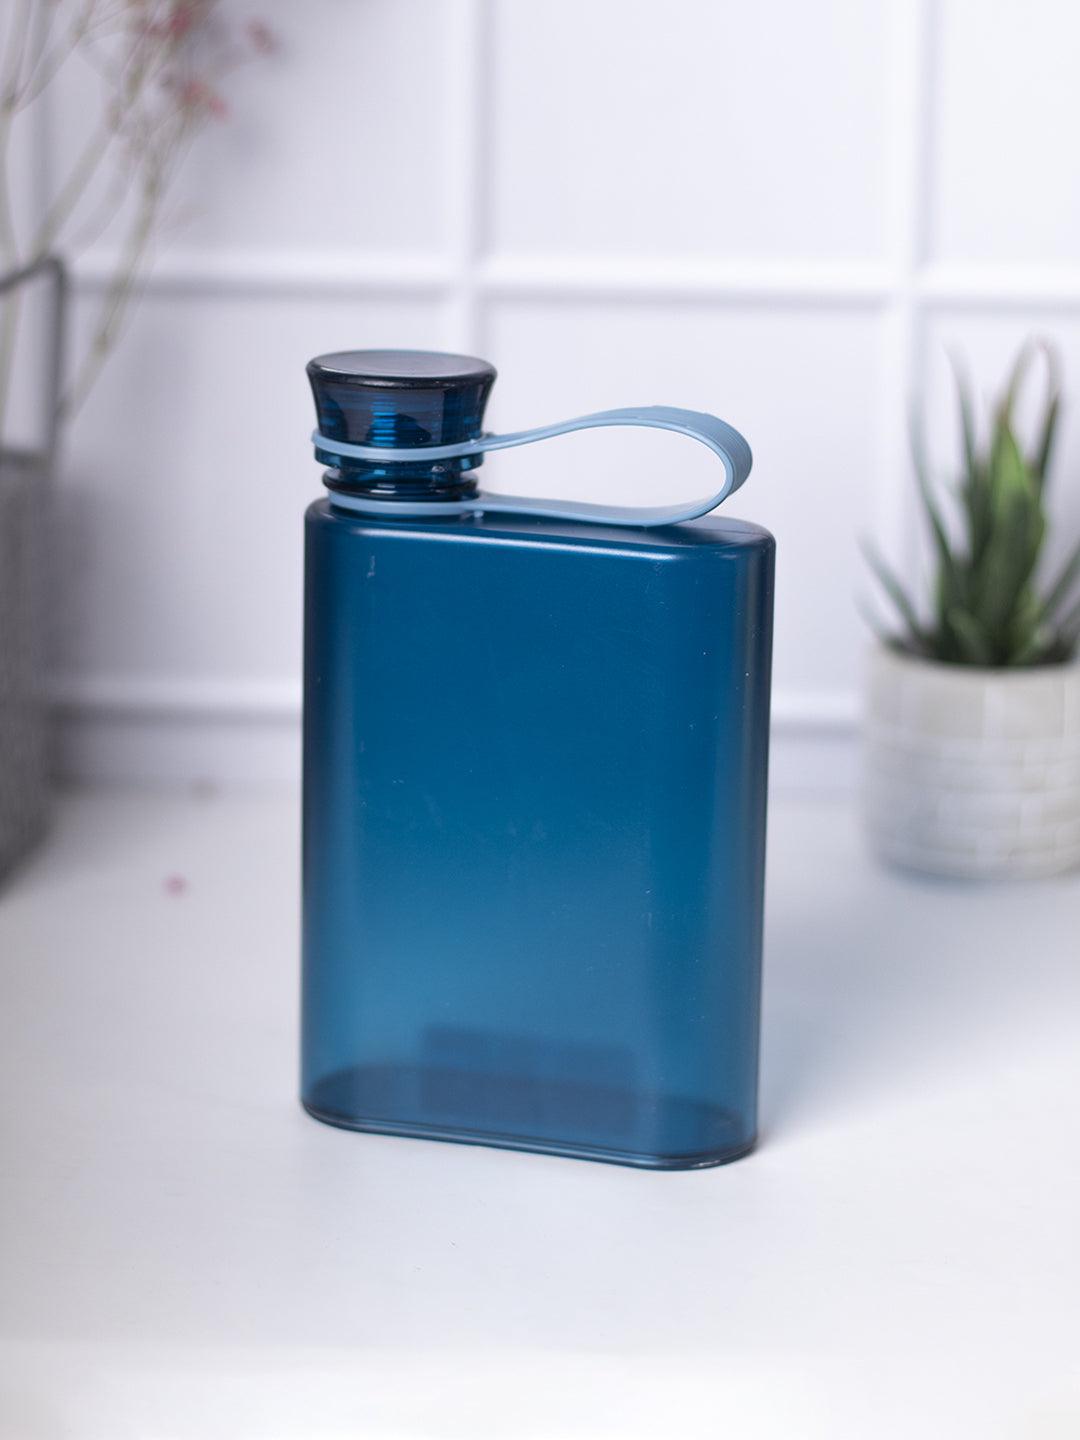 Translucent Plastic Bottle in Dark Blue 380 mL Capacity - MARKET 99